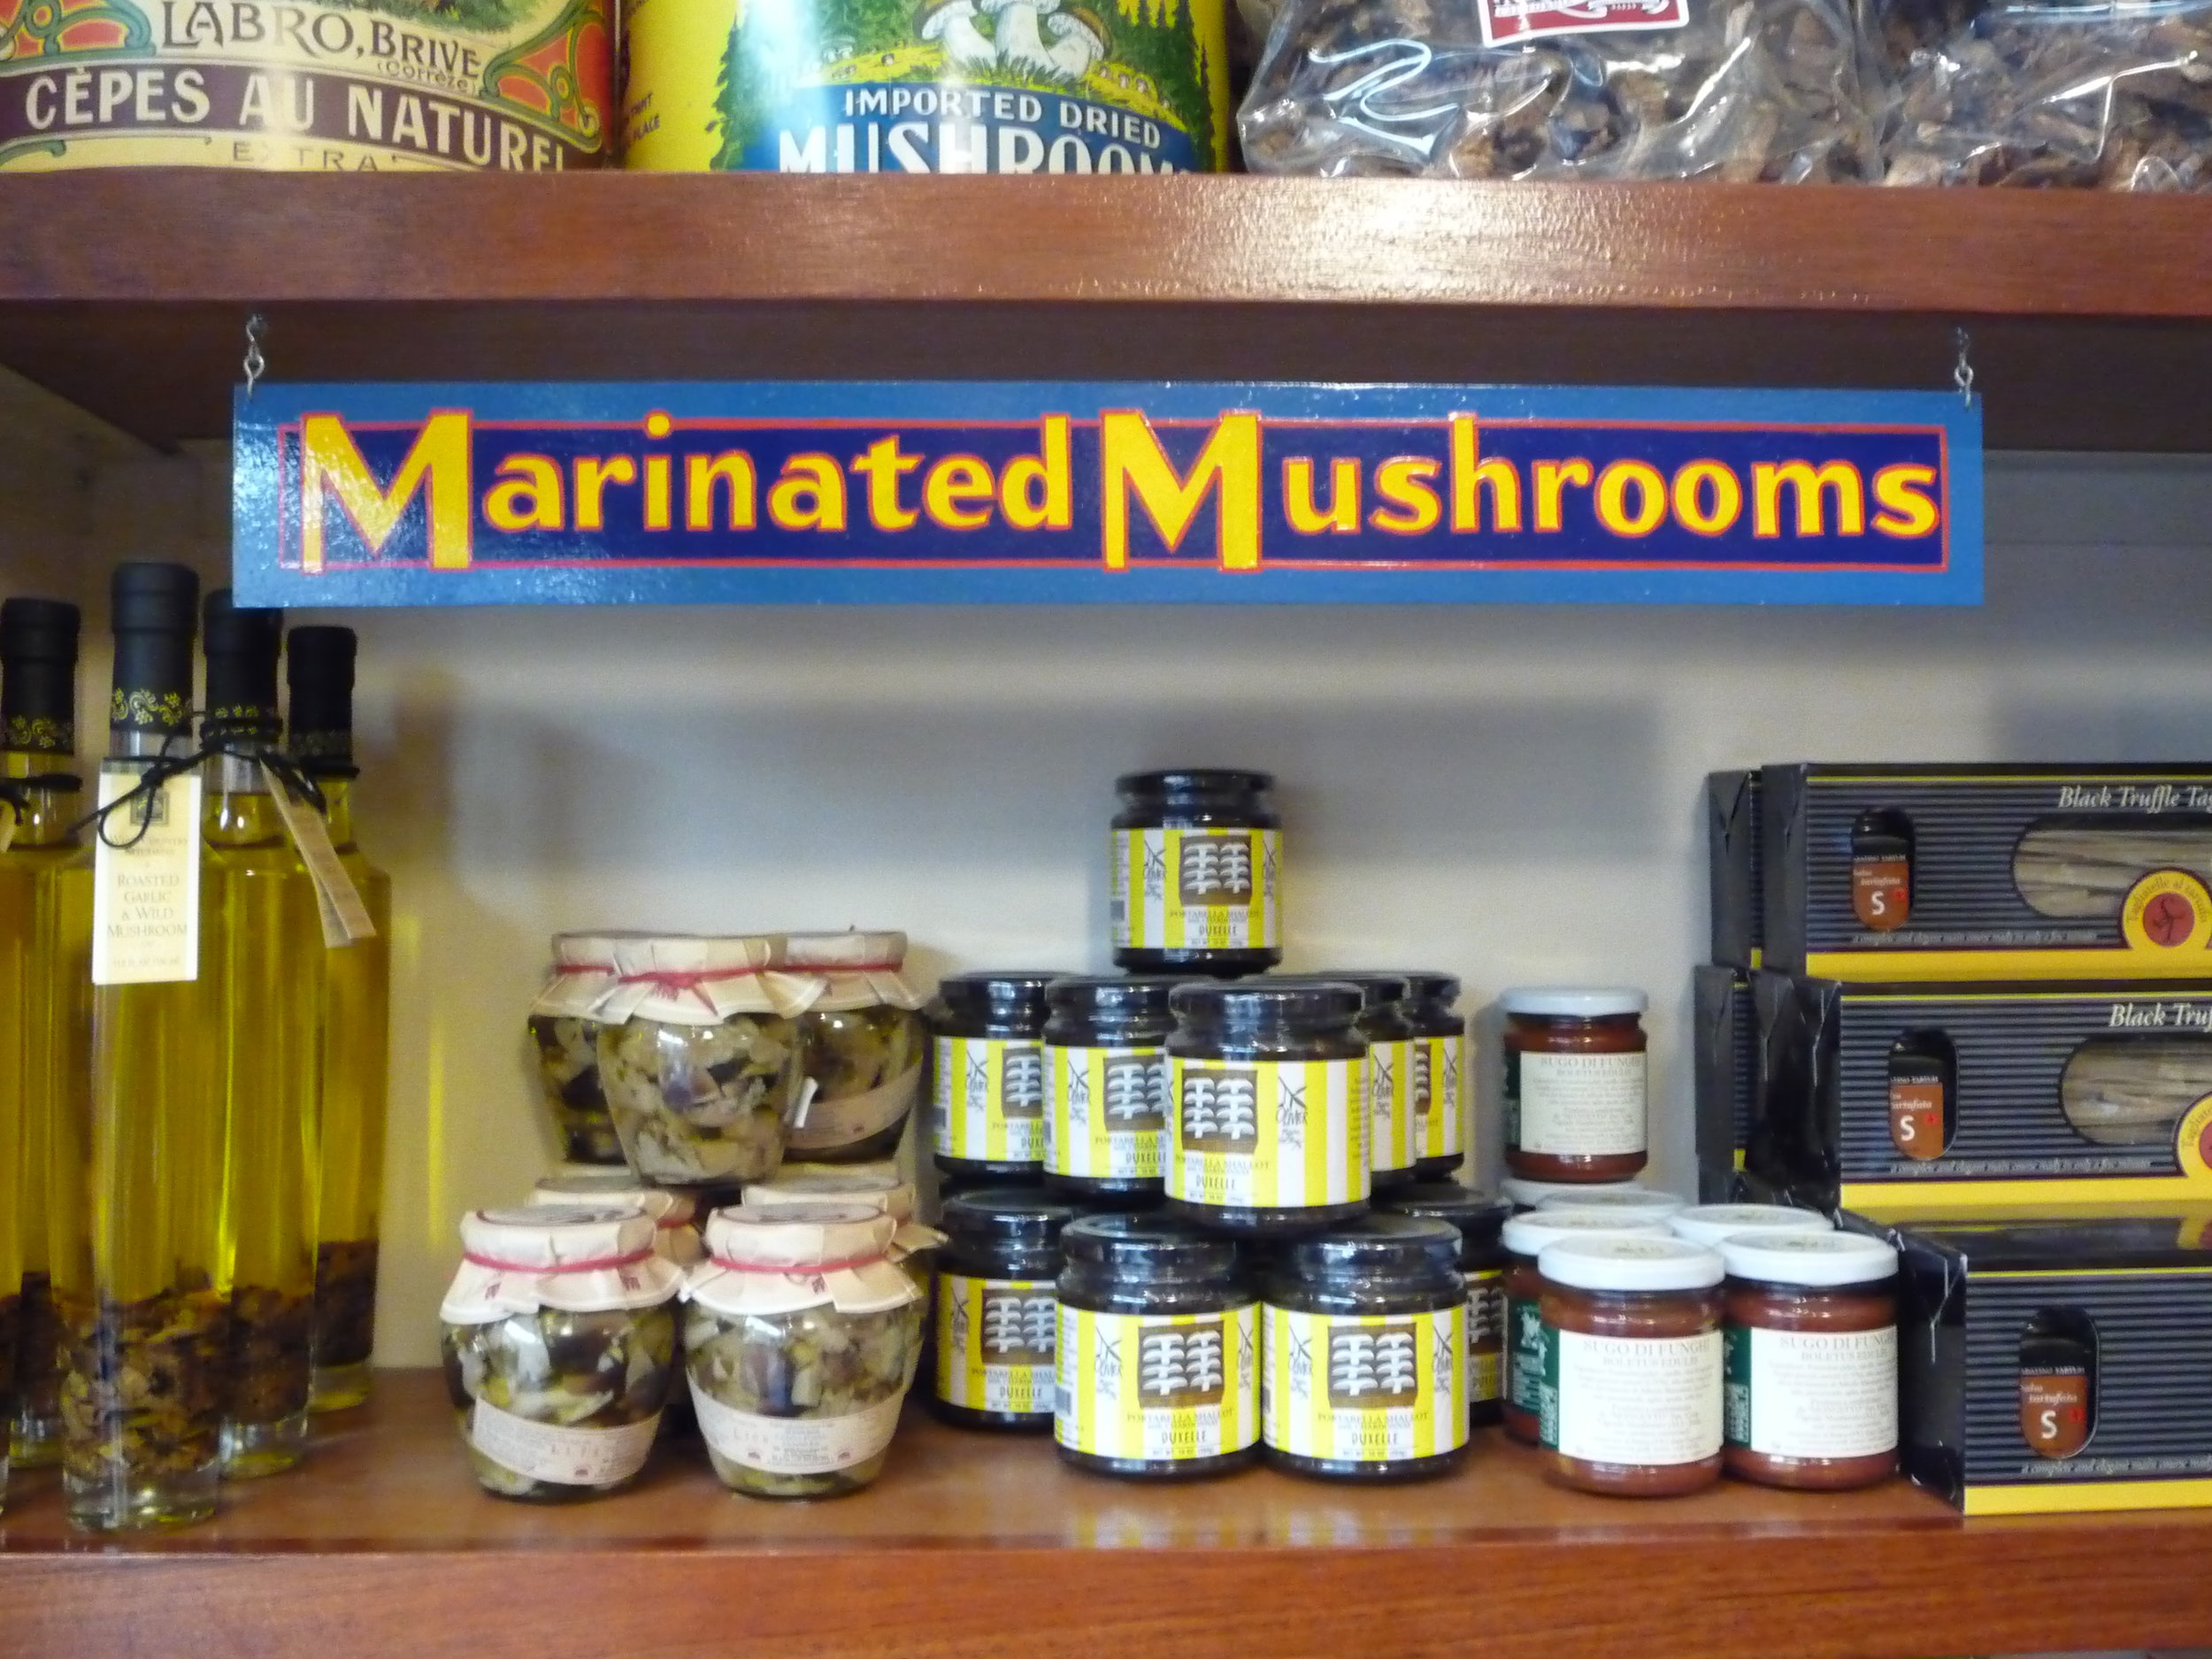 ORIG-far-west-fungi-marinated-mushrooms-shelf-sign_4323725446_o.jpg